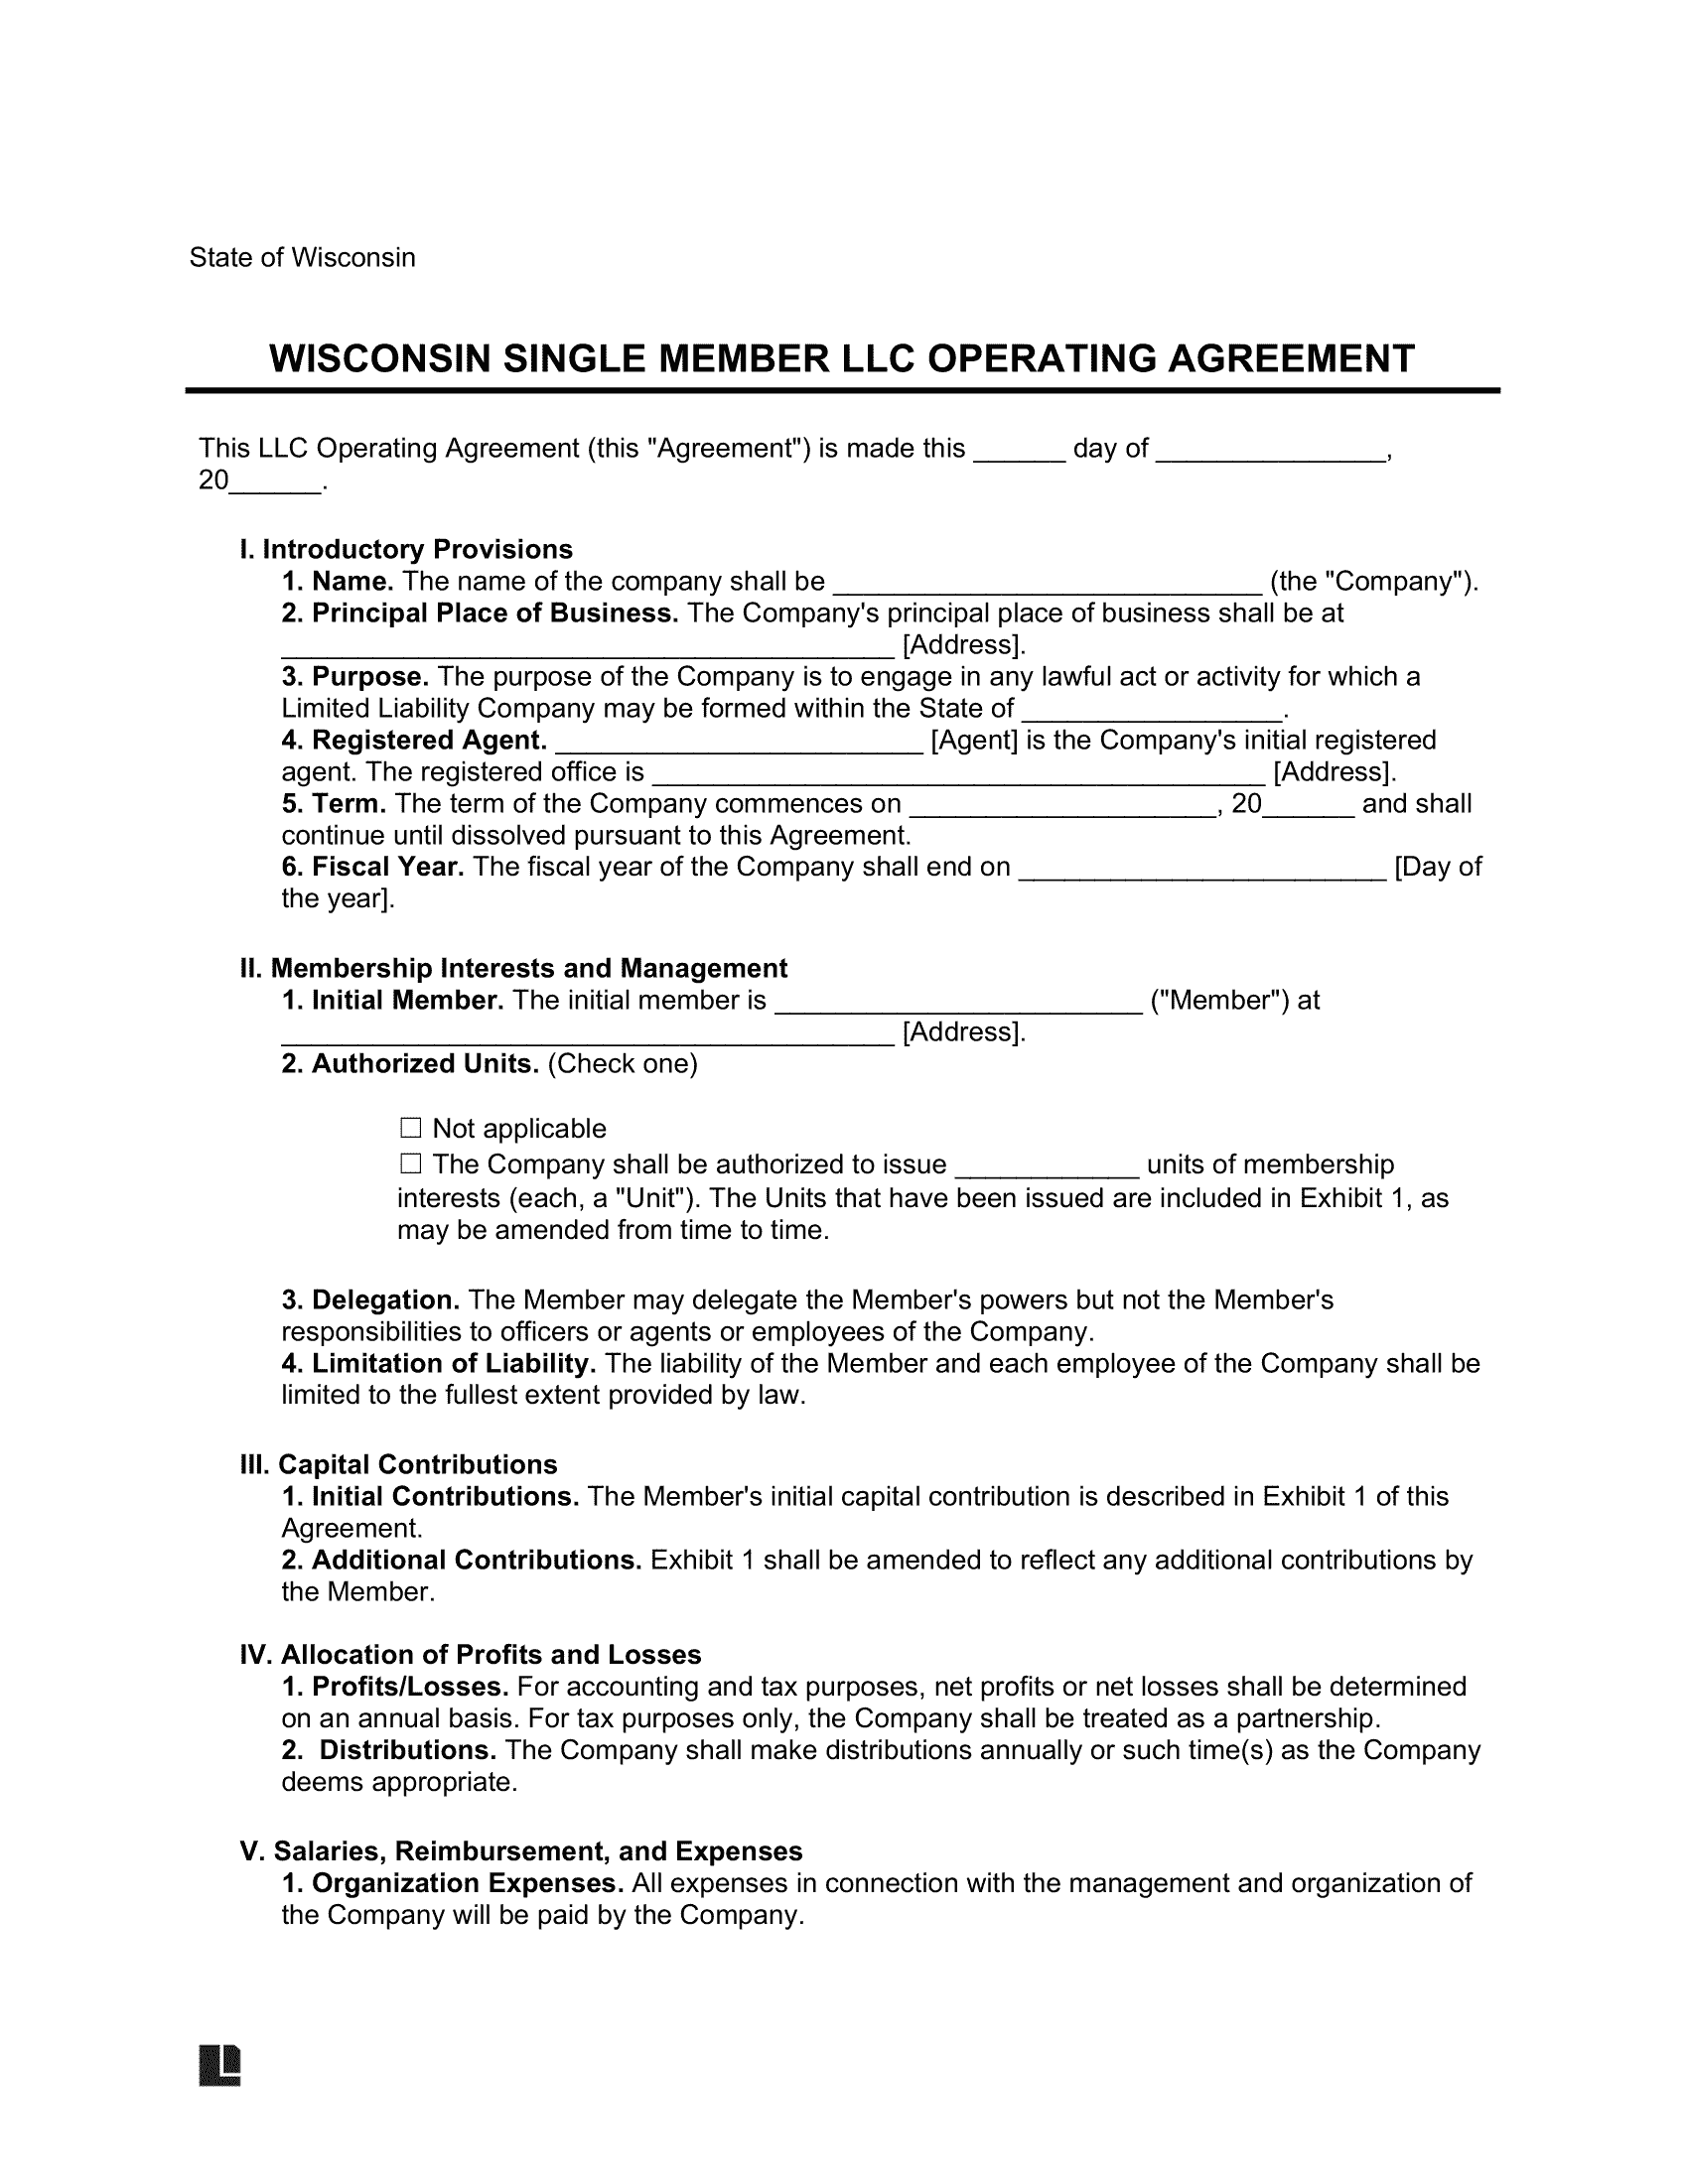 Wisconsin Single Member LLC Operating Agreement Form